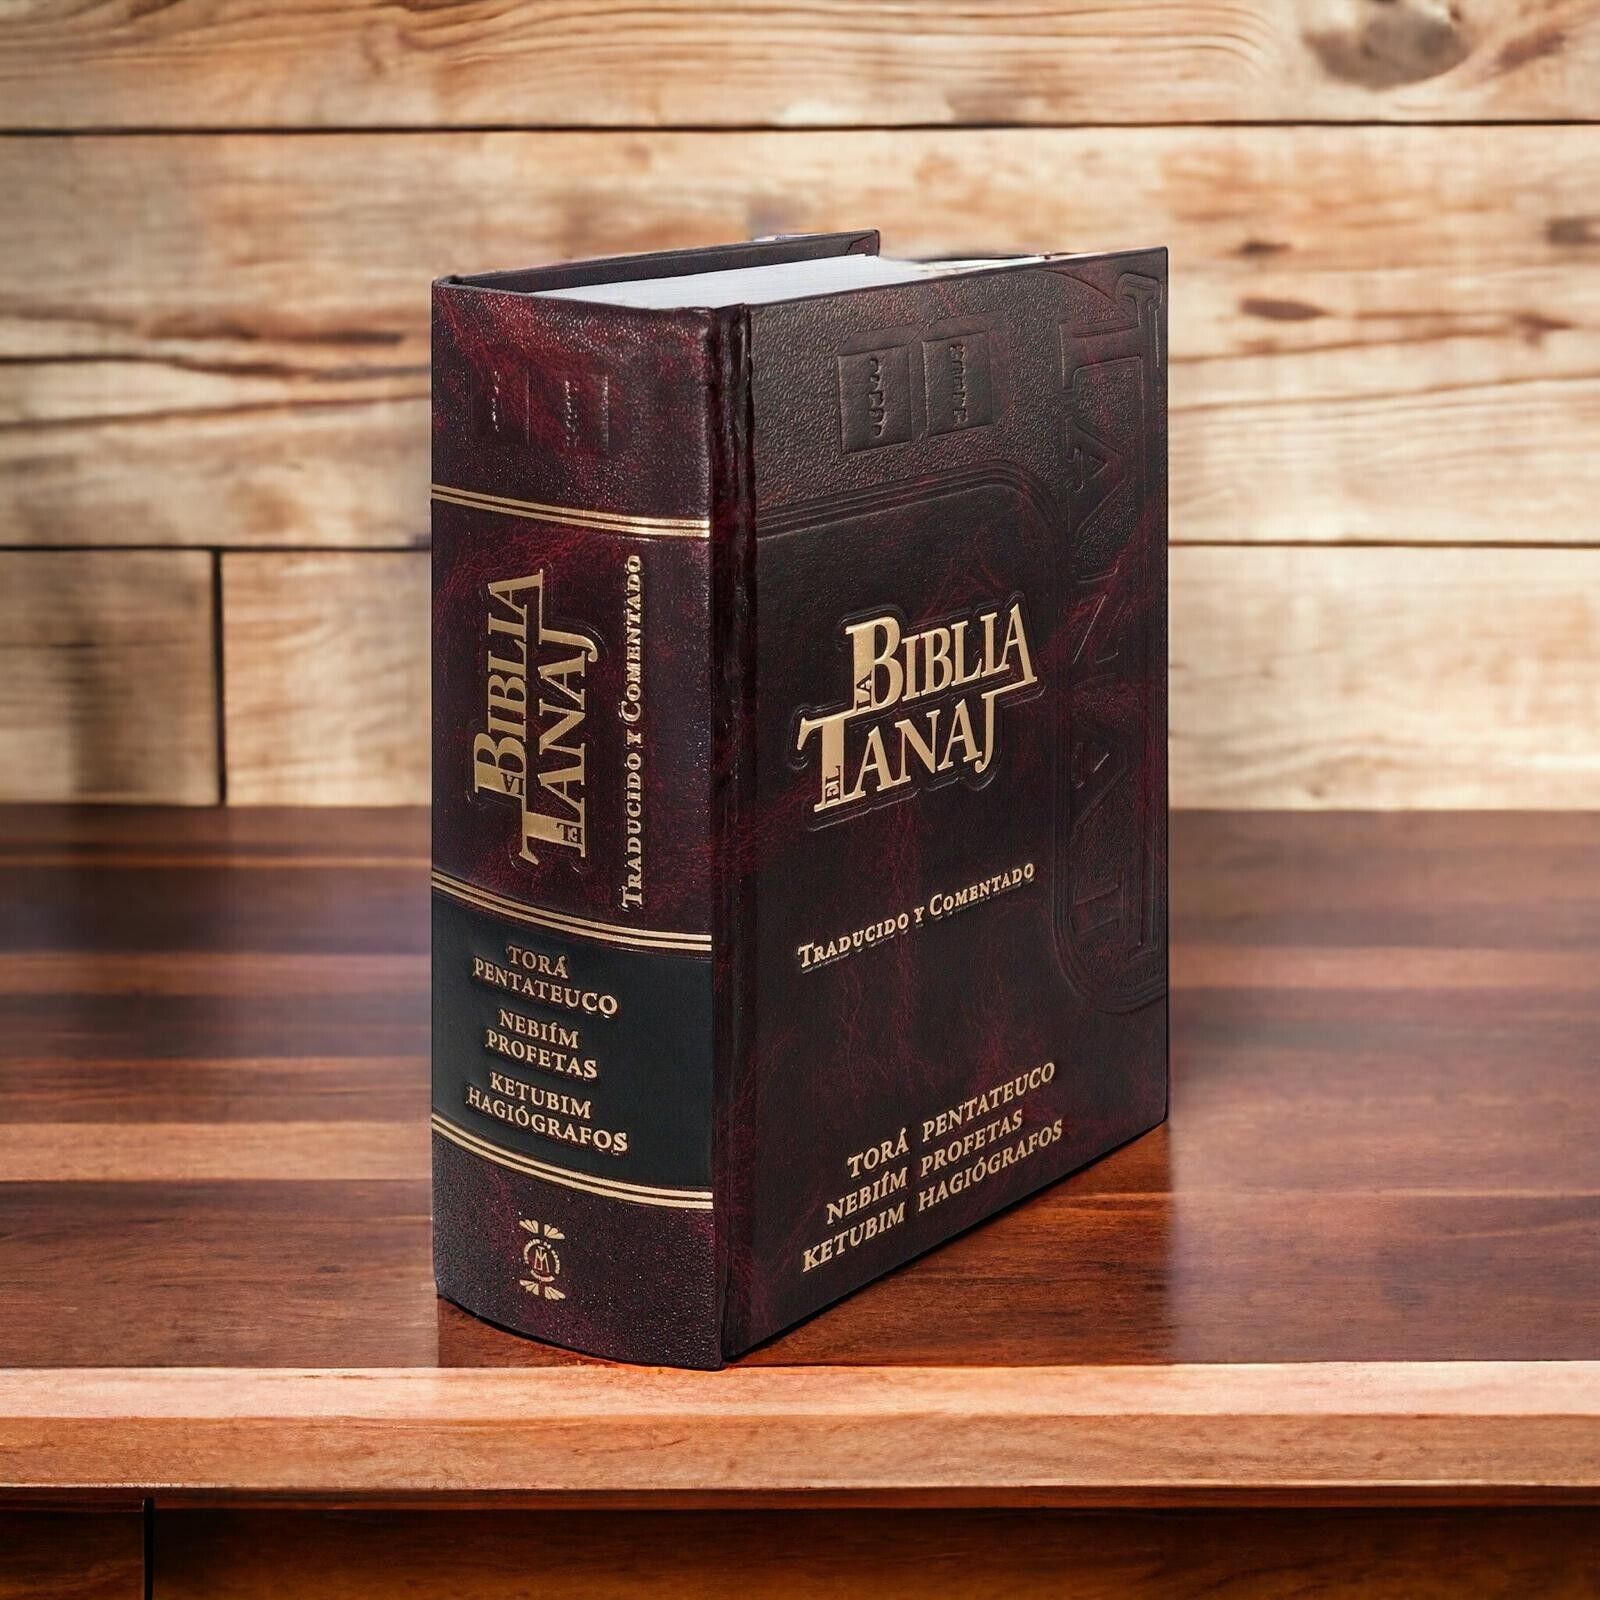 La Biblia Book Española Bible Hebrea Completa - Tanaj Judio ( Spanish Edition )